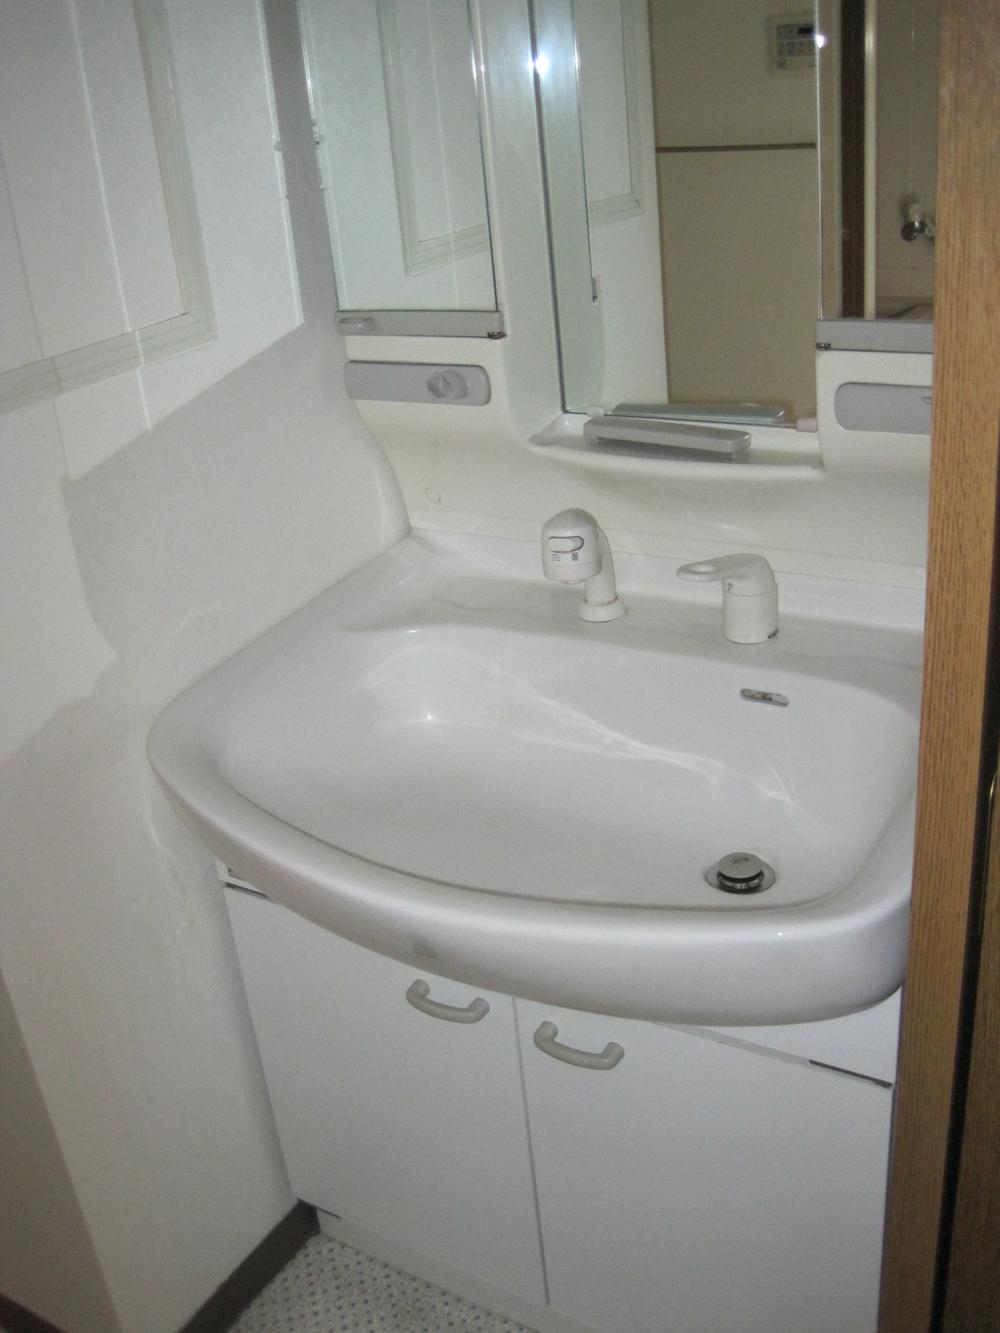 Wash basin, toilet. Indoor (March 2011) shooting